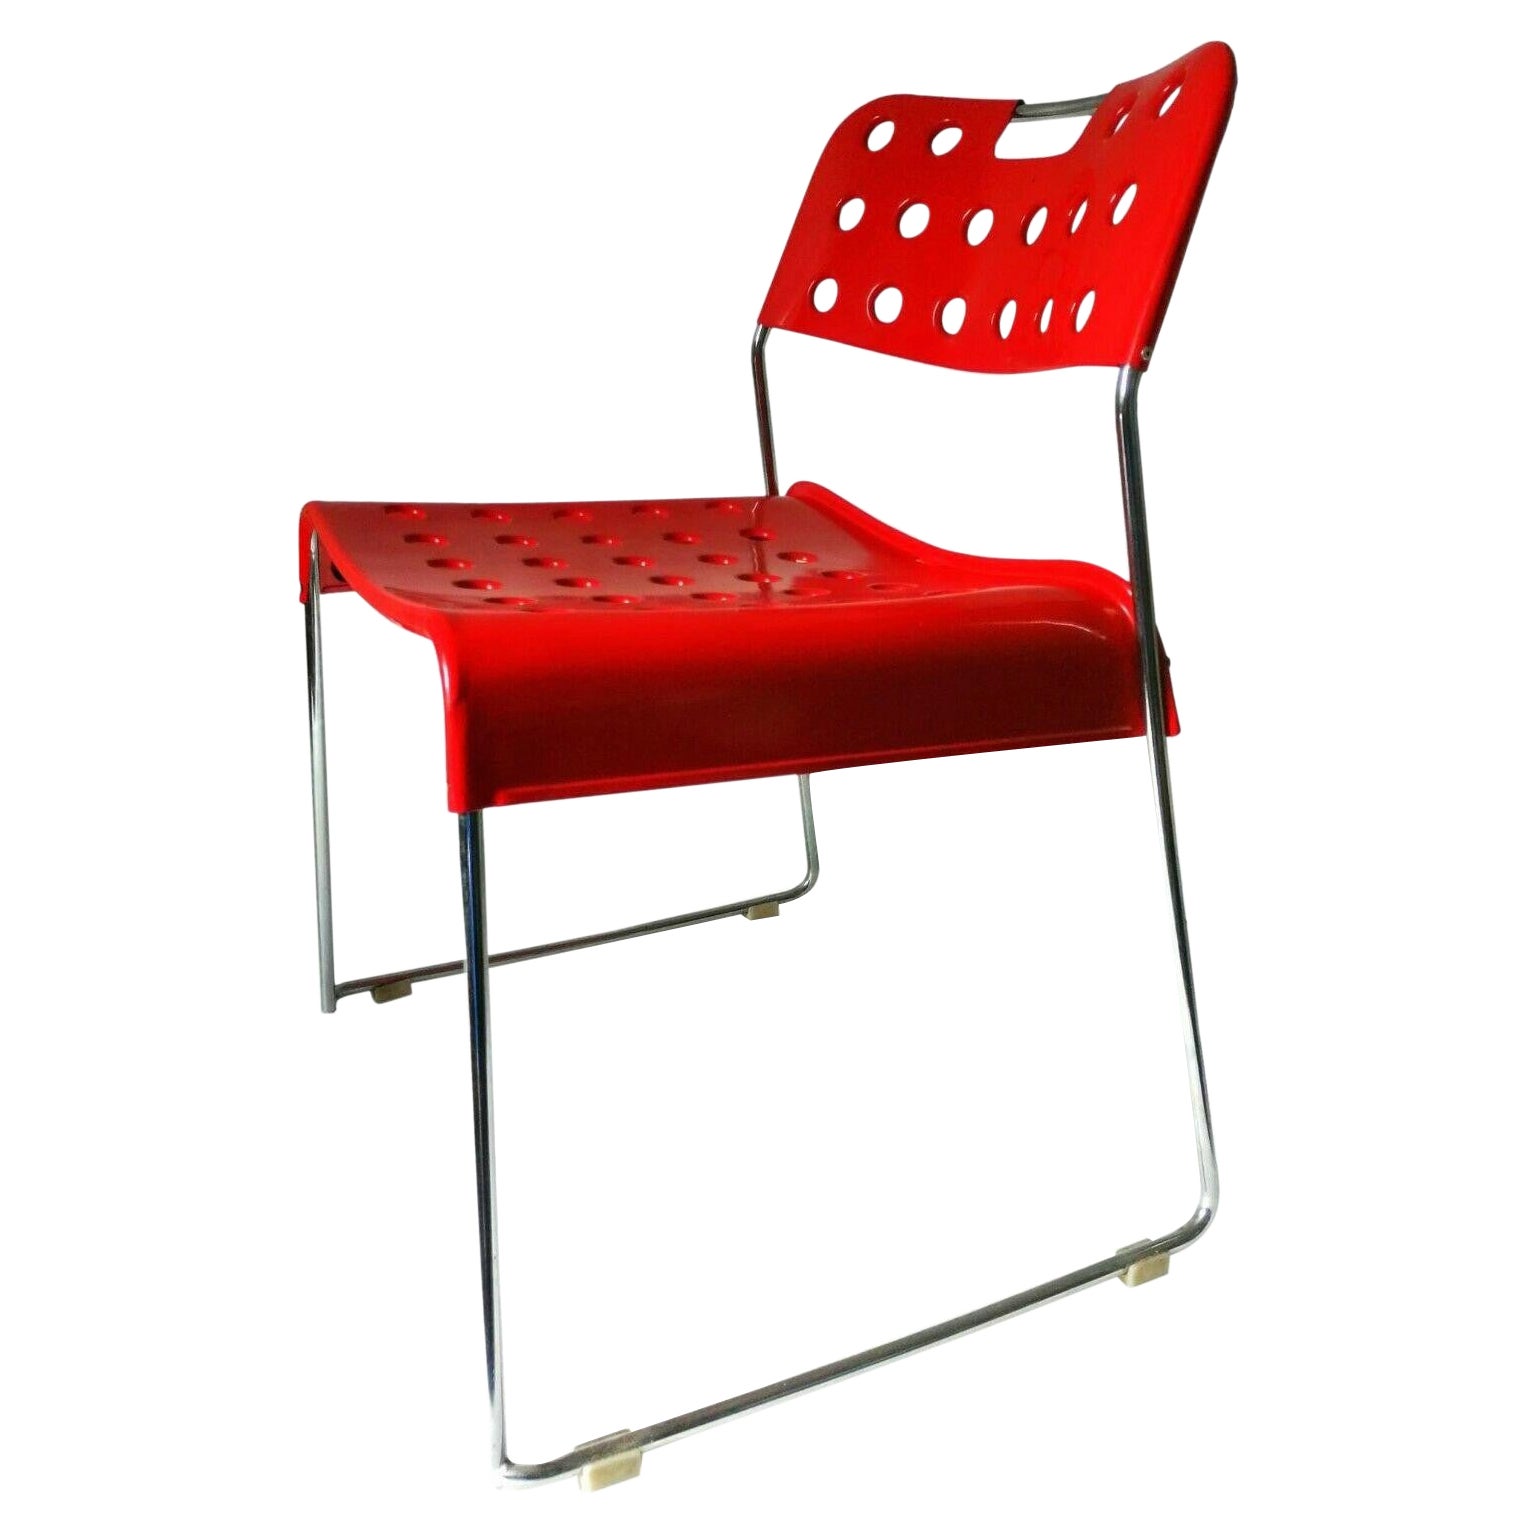 Chair "Omk Omstak" Design Rodney Kinsman for Bieffeplast, 1970s